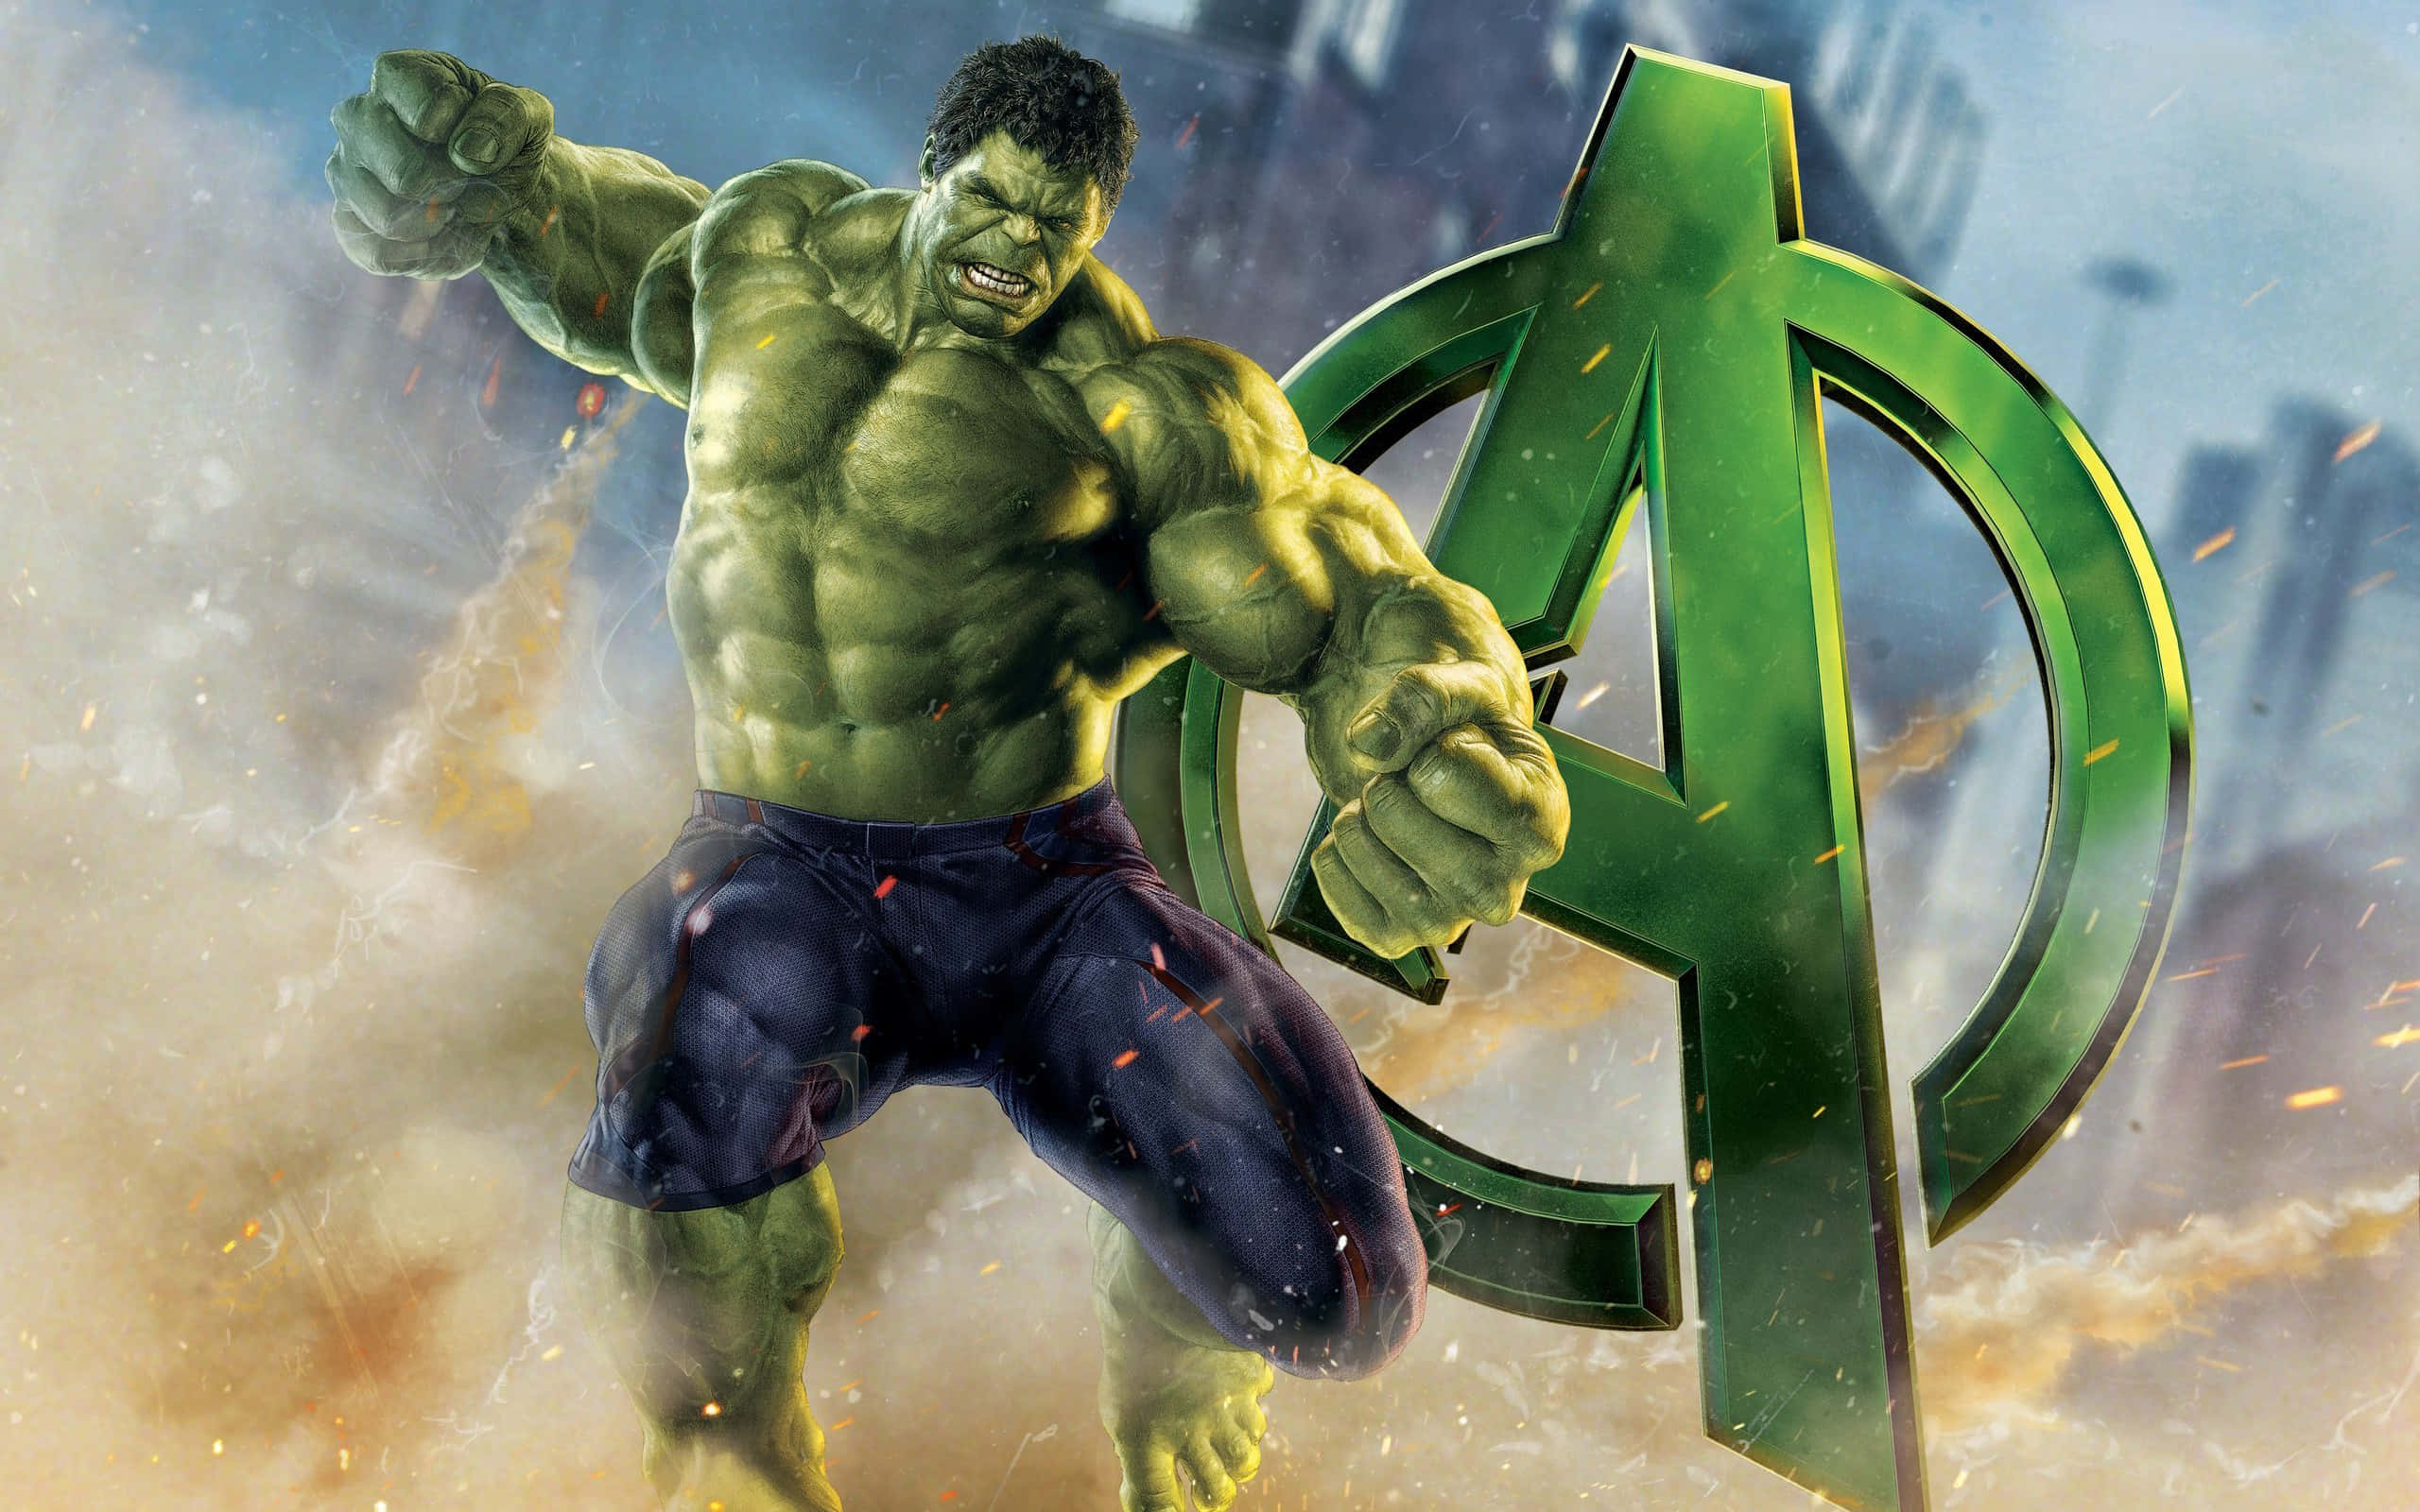 “The Incredible Hulk”